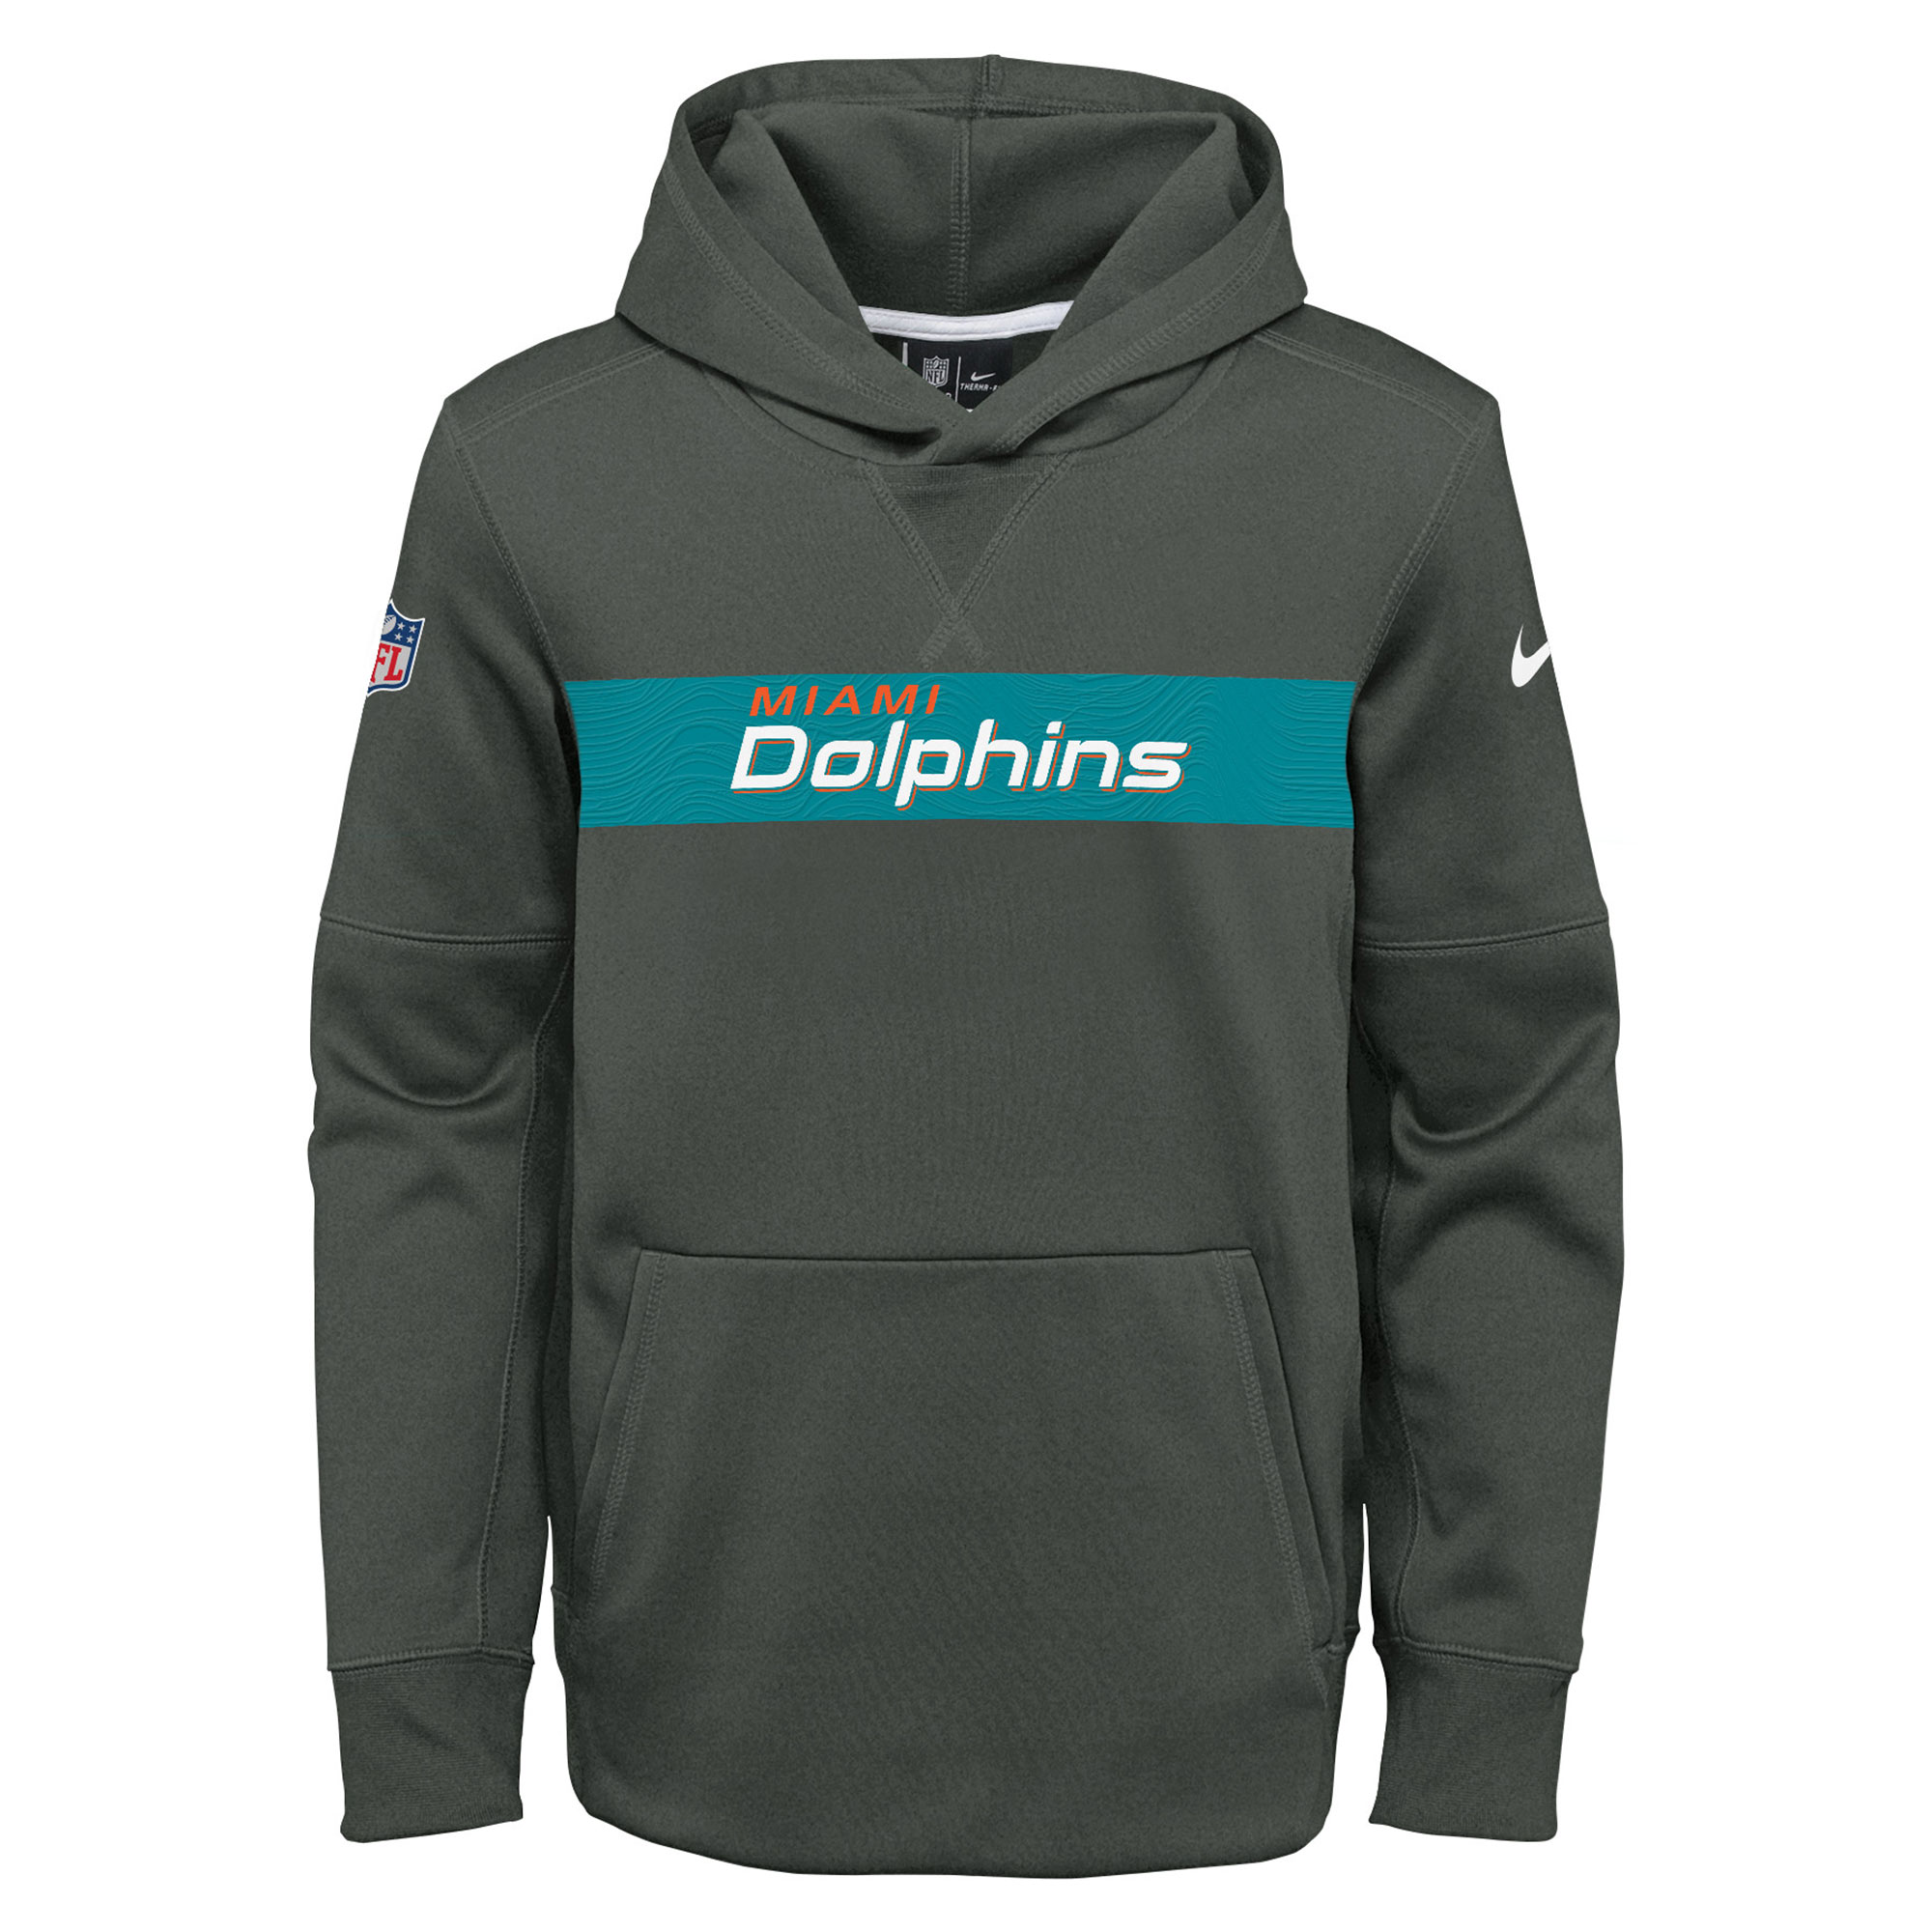 miami dolphins nike hoodie